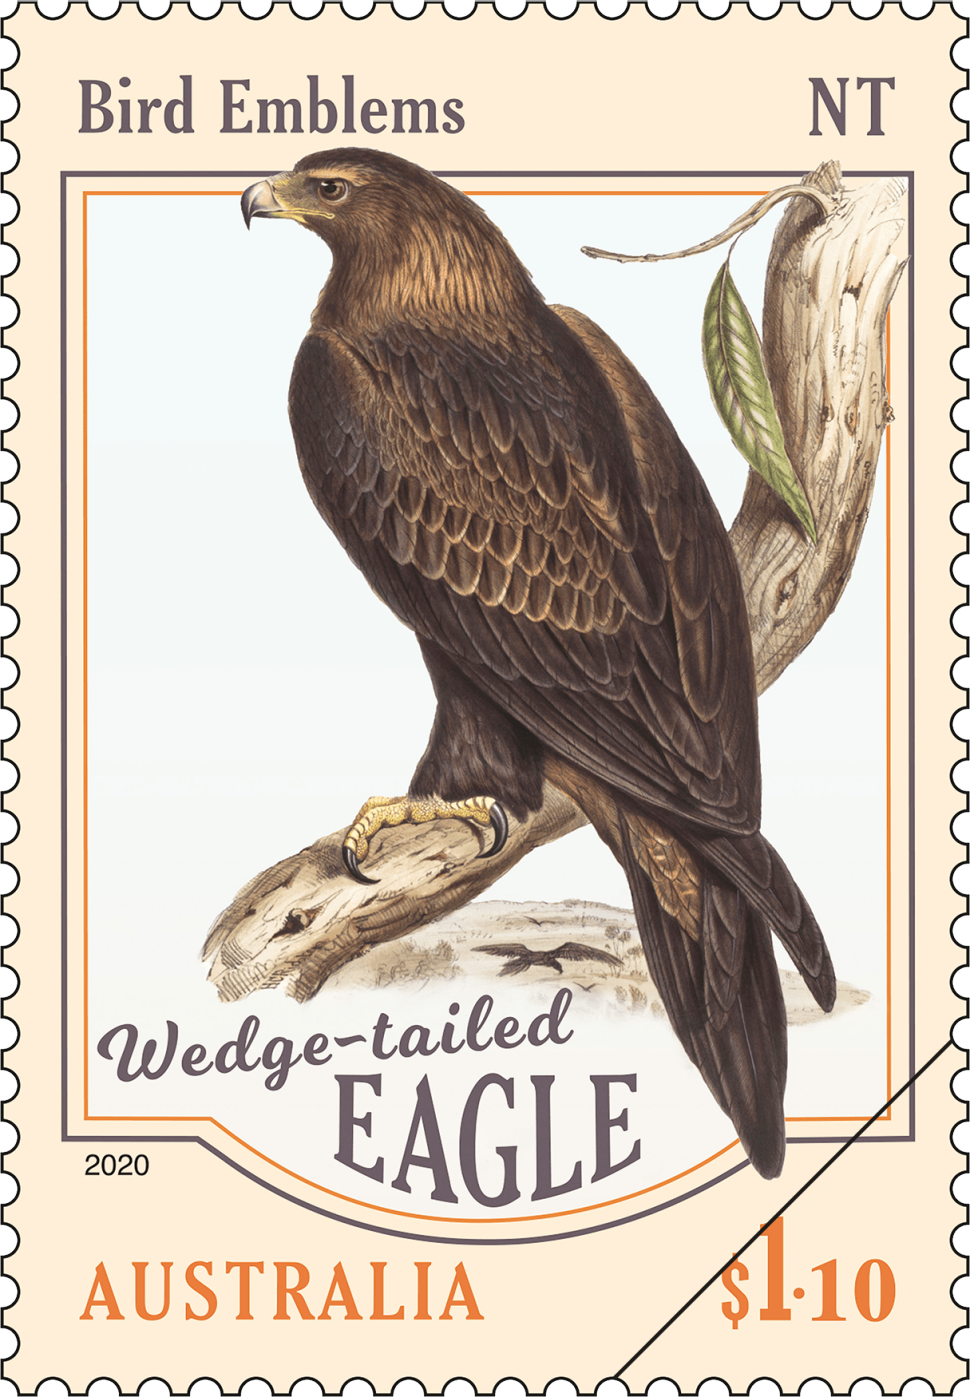 $1.10 - Wedge-tailed Eagle